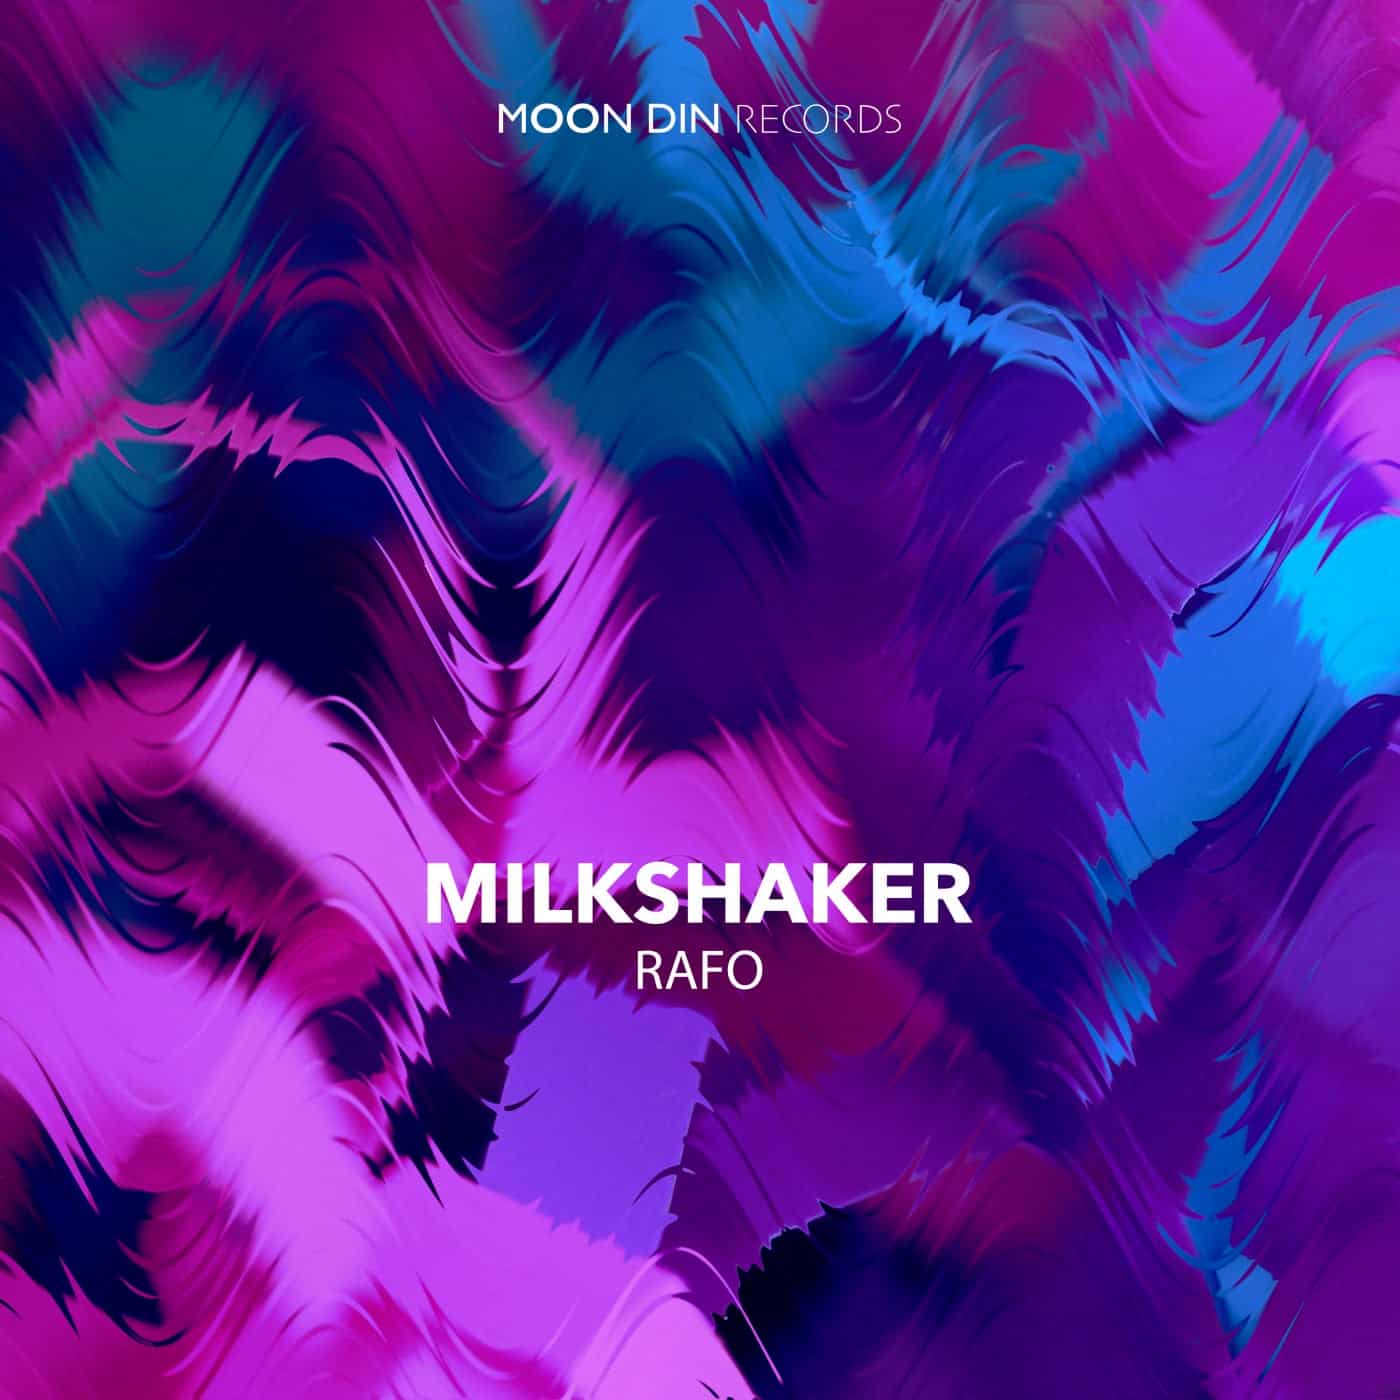 image cover: Milkshaker by RAFO on Moon Din Records